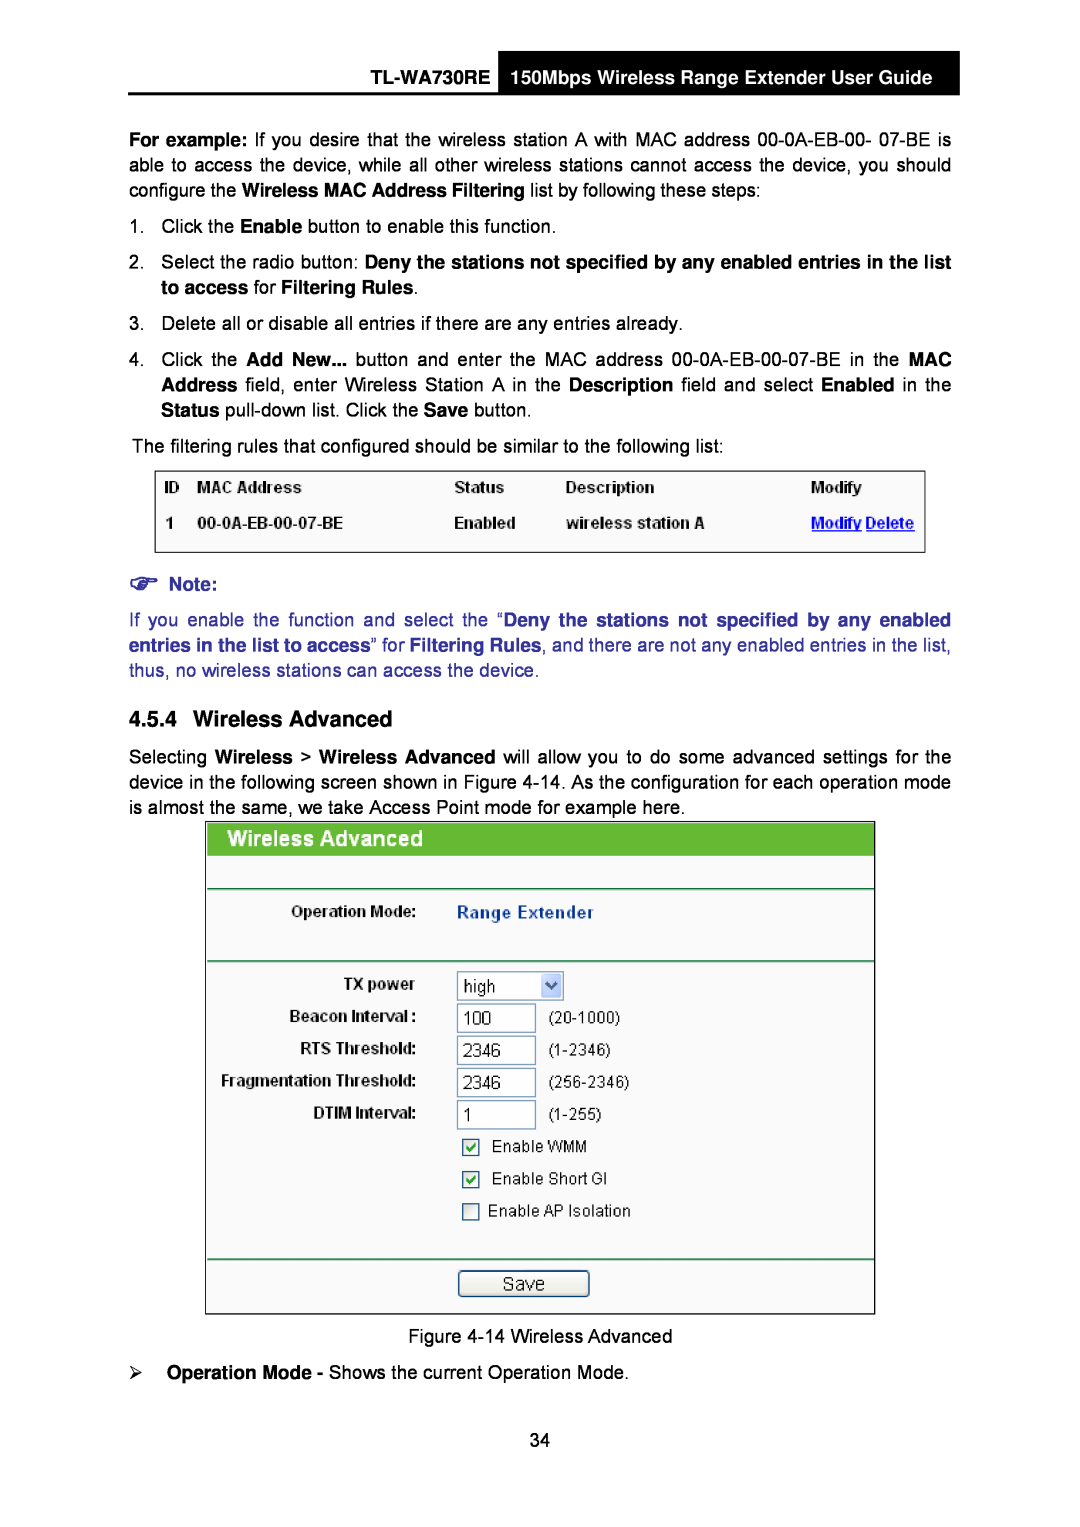 TP-Link manual Wireless Advanced, TL-WA730RE 150Mbps Wireless Range Extender User Guide 